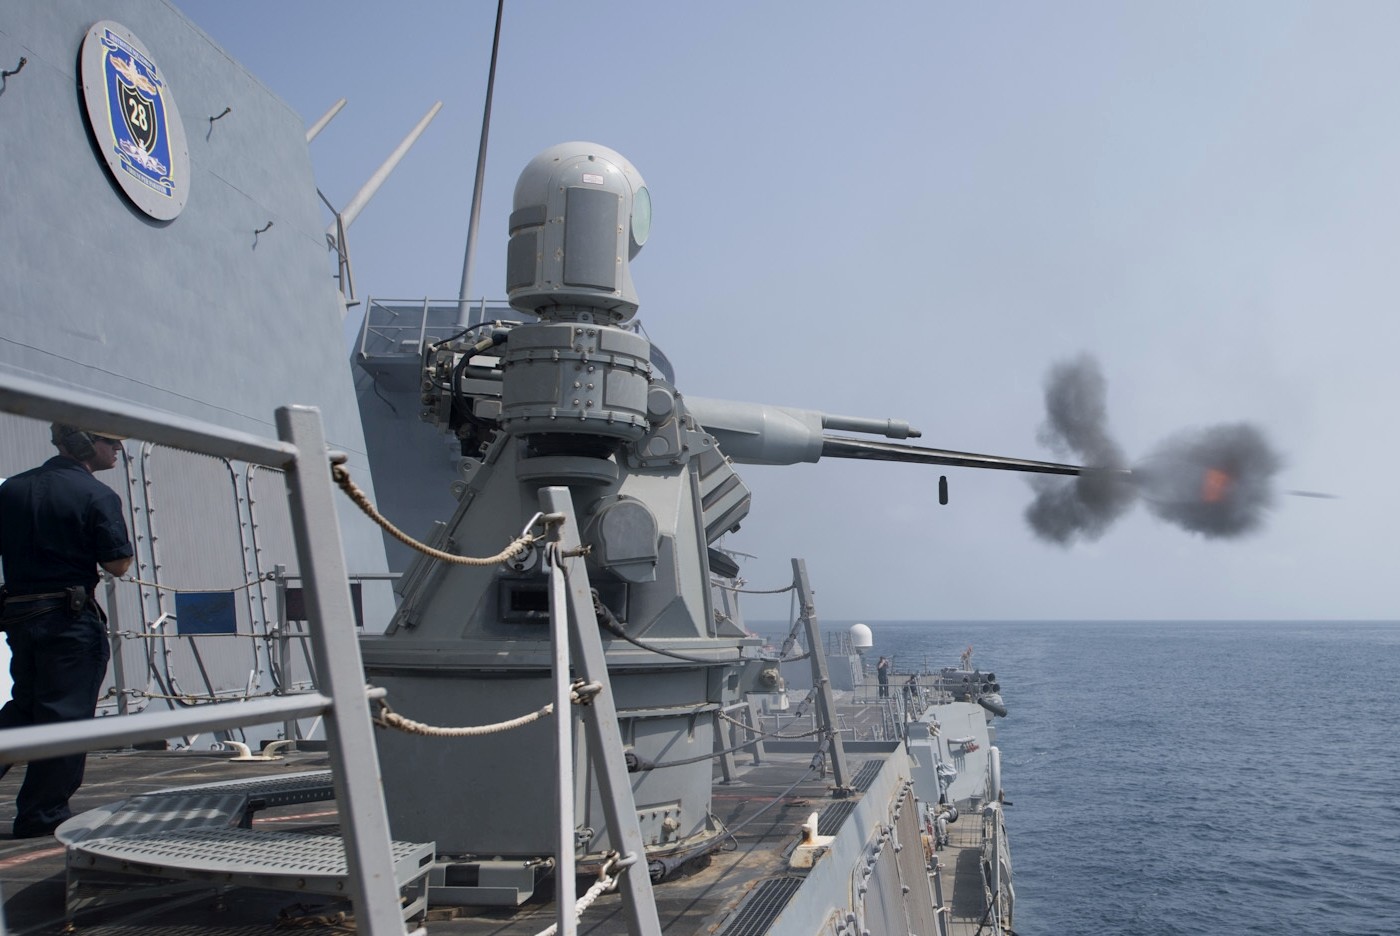 ddg-109 uss jason dunham arleigh burke class guided missile destroyer aegis us navy mk.38 mod.2 machine gun 49